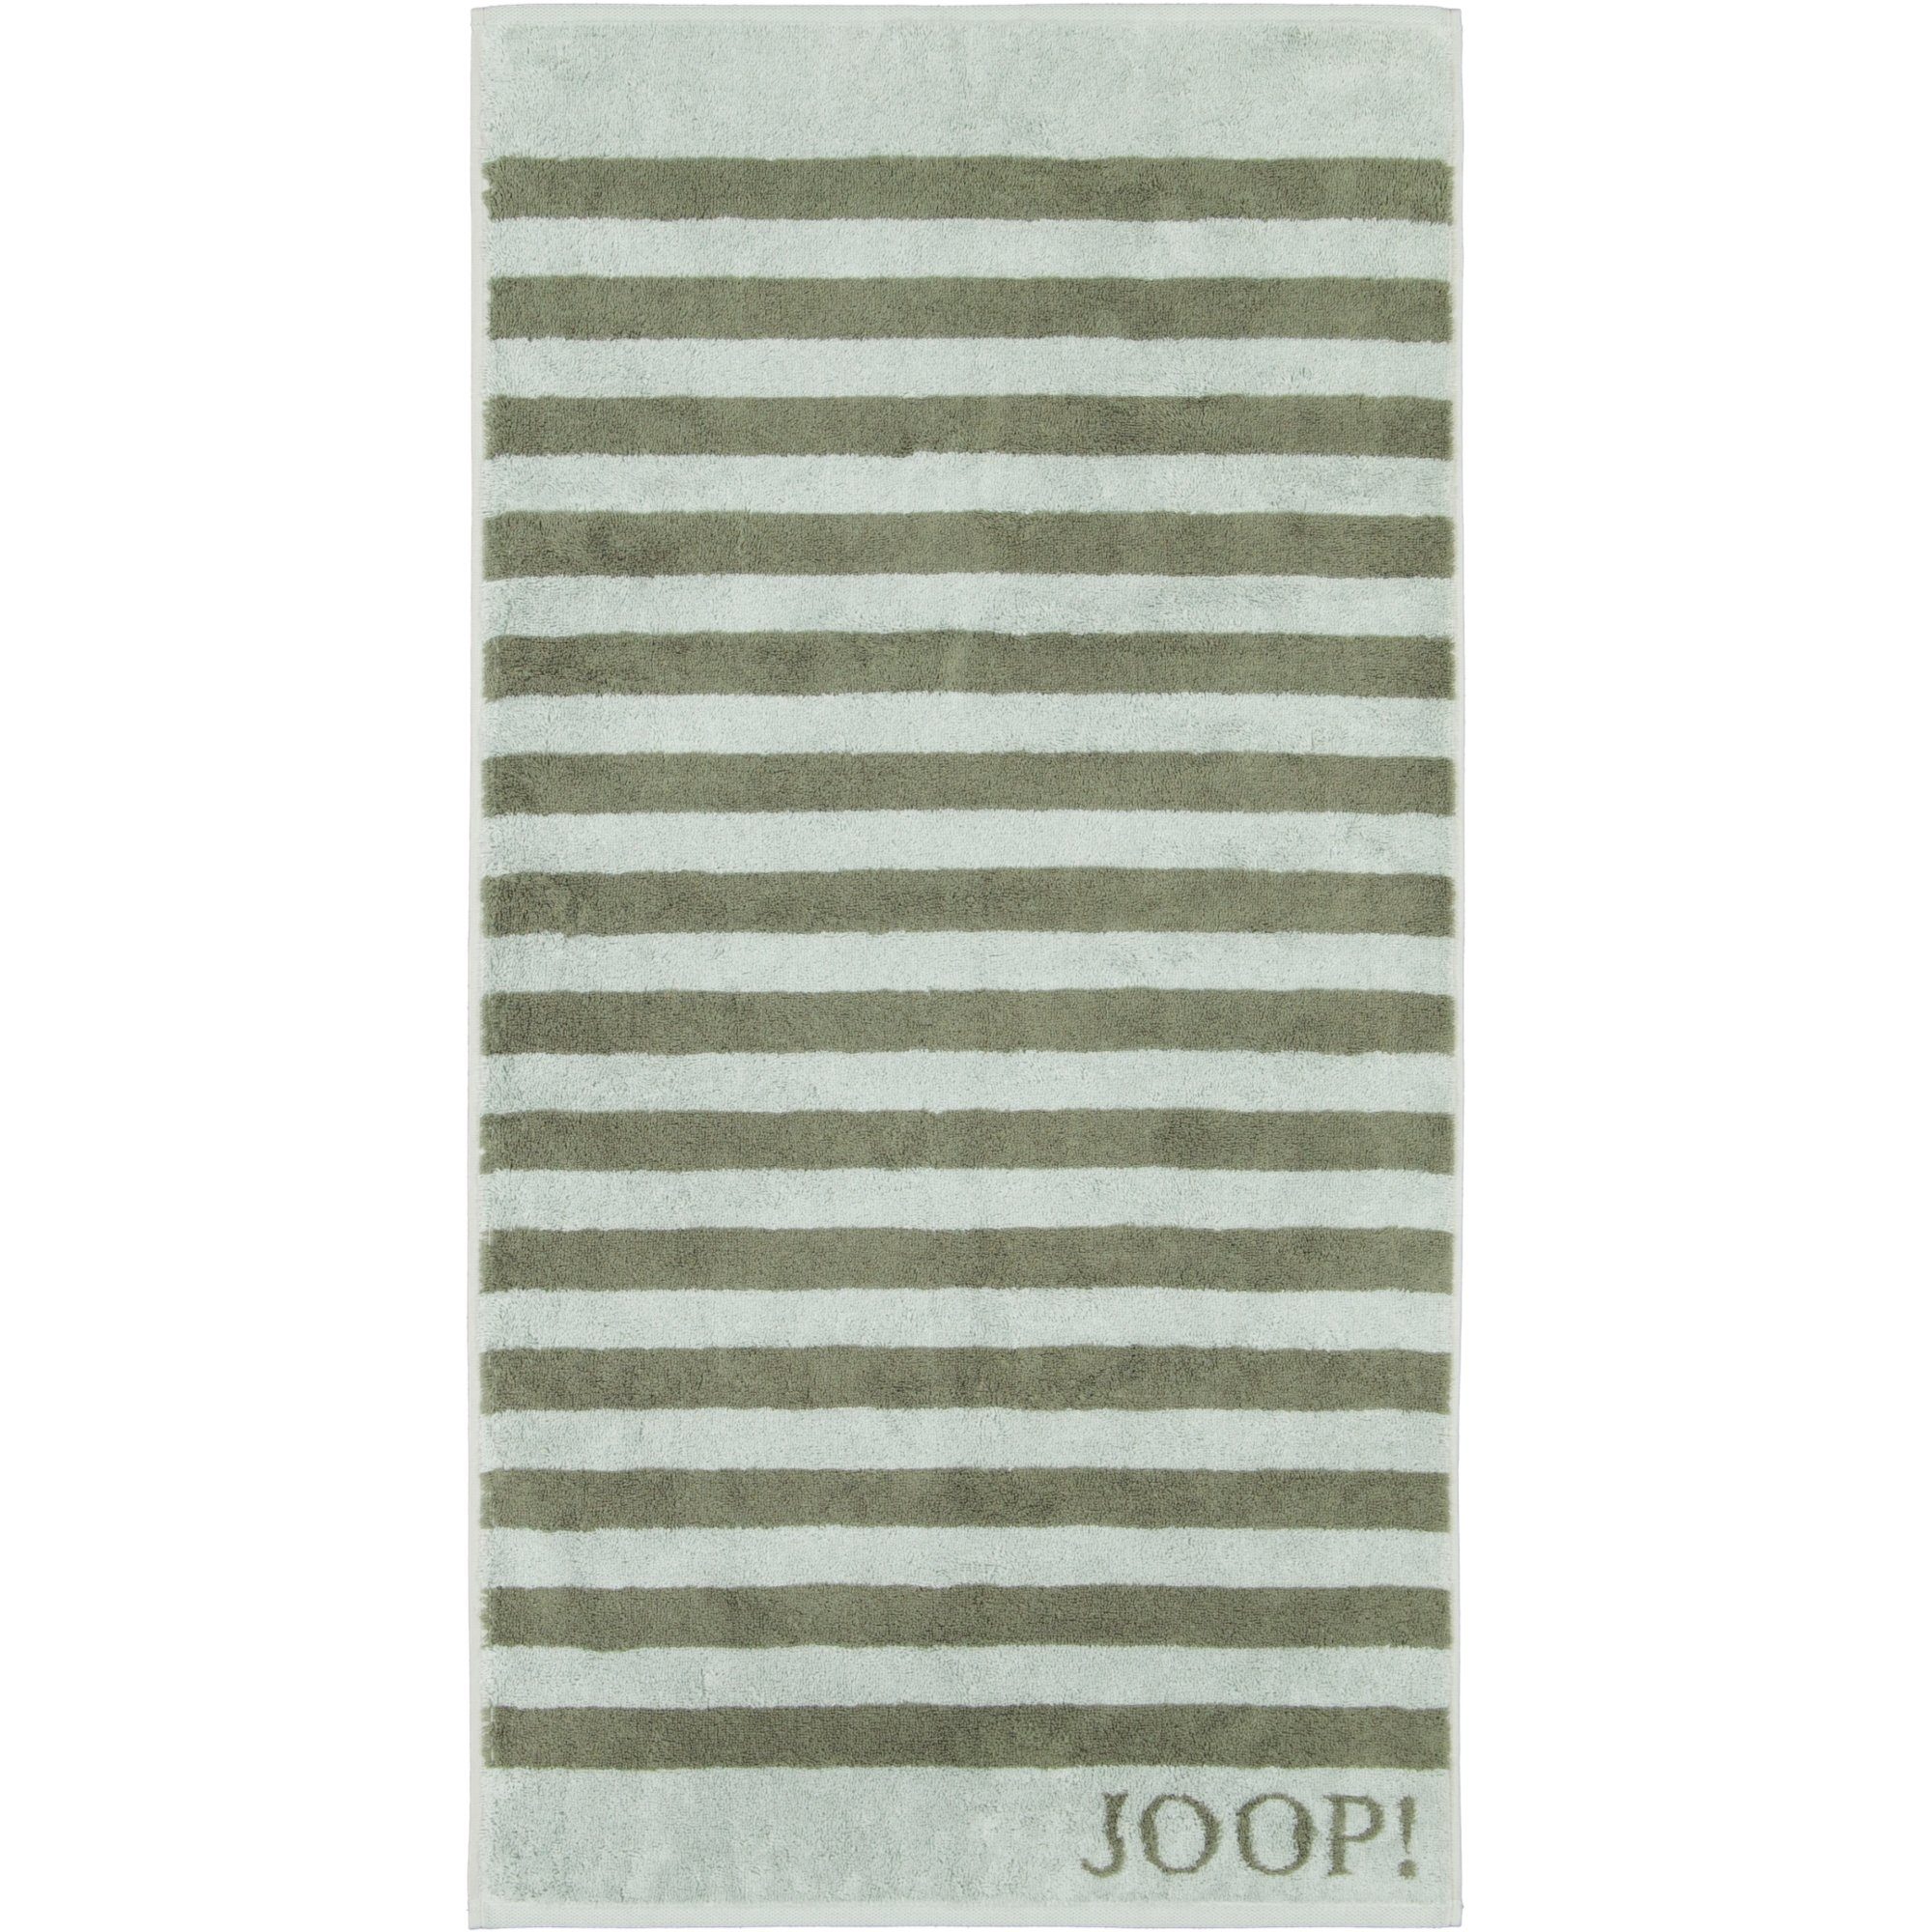 Stripes Salbei 1610, 100% Classic Joop! Baumwolle Handtücher